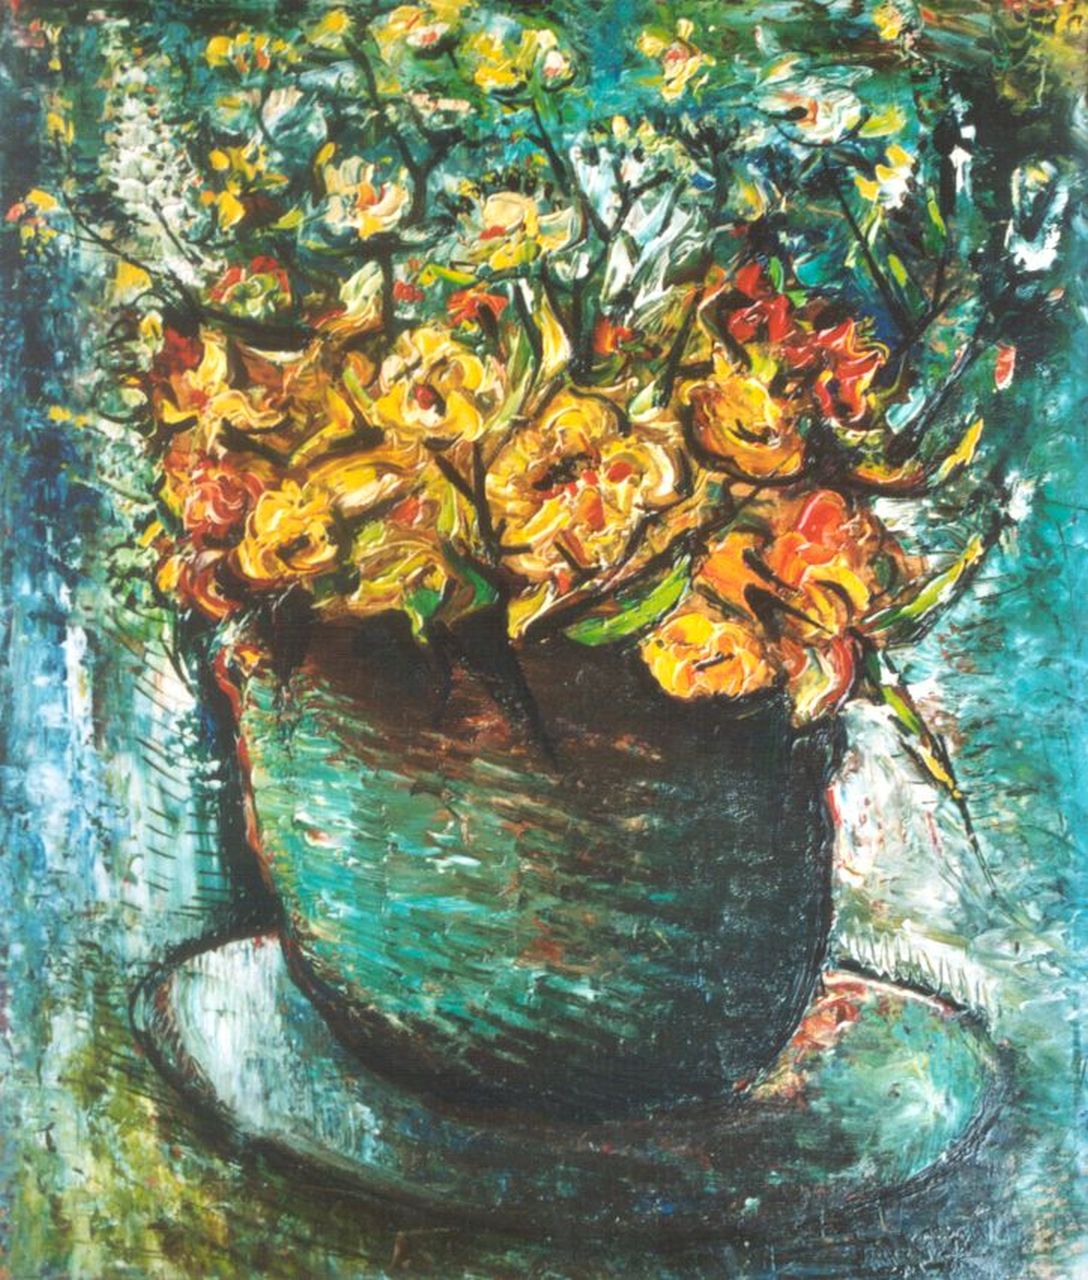 Mels J.W.A.A.M.  | Jacobus Wilhelmus Aloijsius Adrianus Maria Mels, Flowers in an earthenware pot, oil on painter's board 34.9 x 29.7 cm, signed l.r.